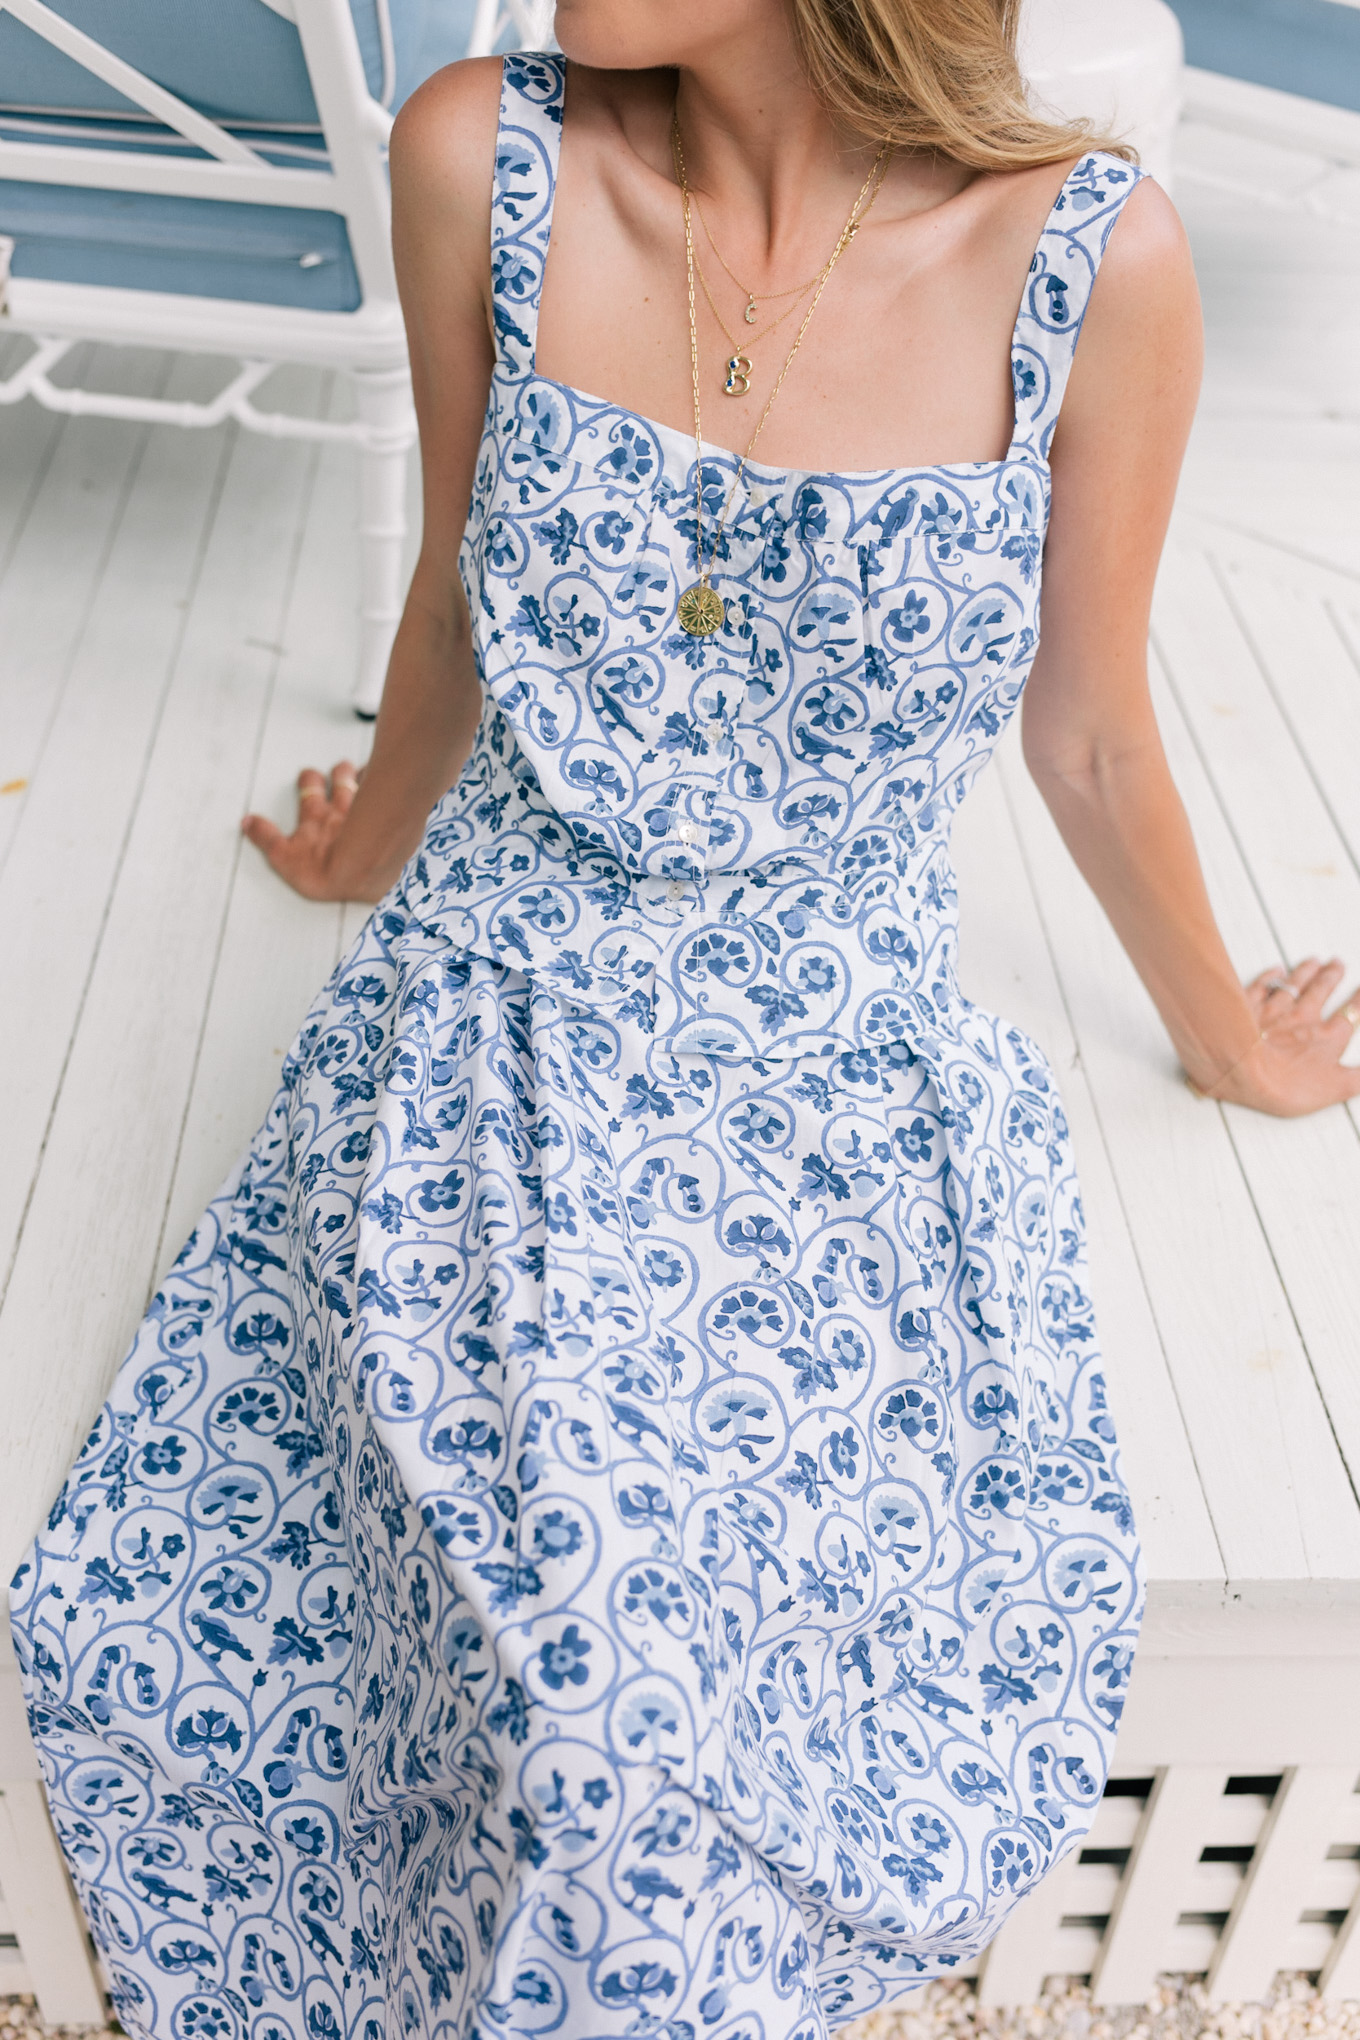 blue white floral top skirt set